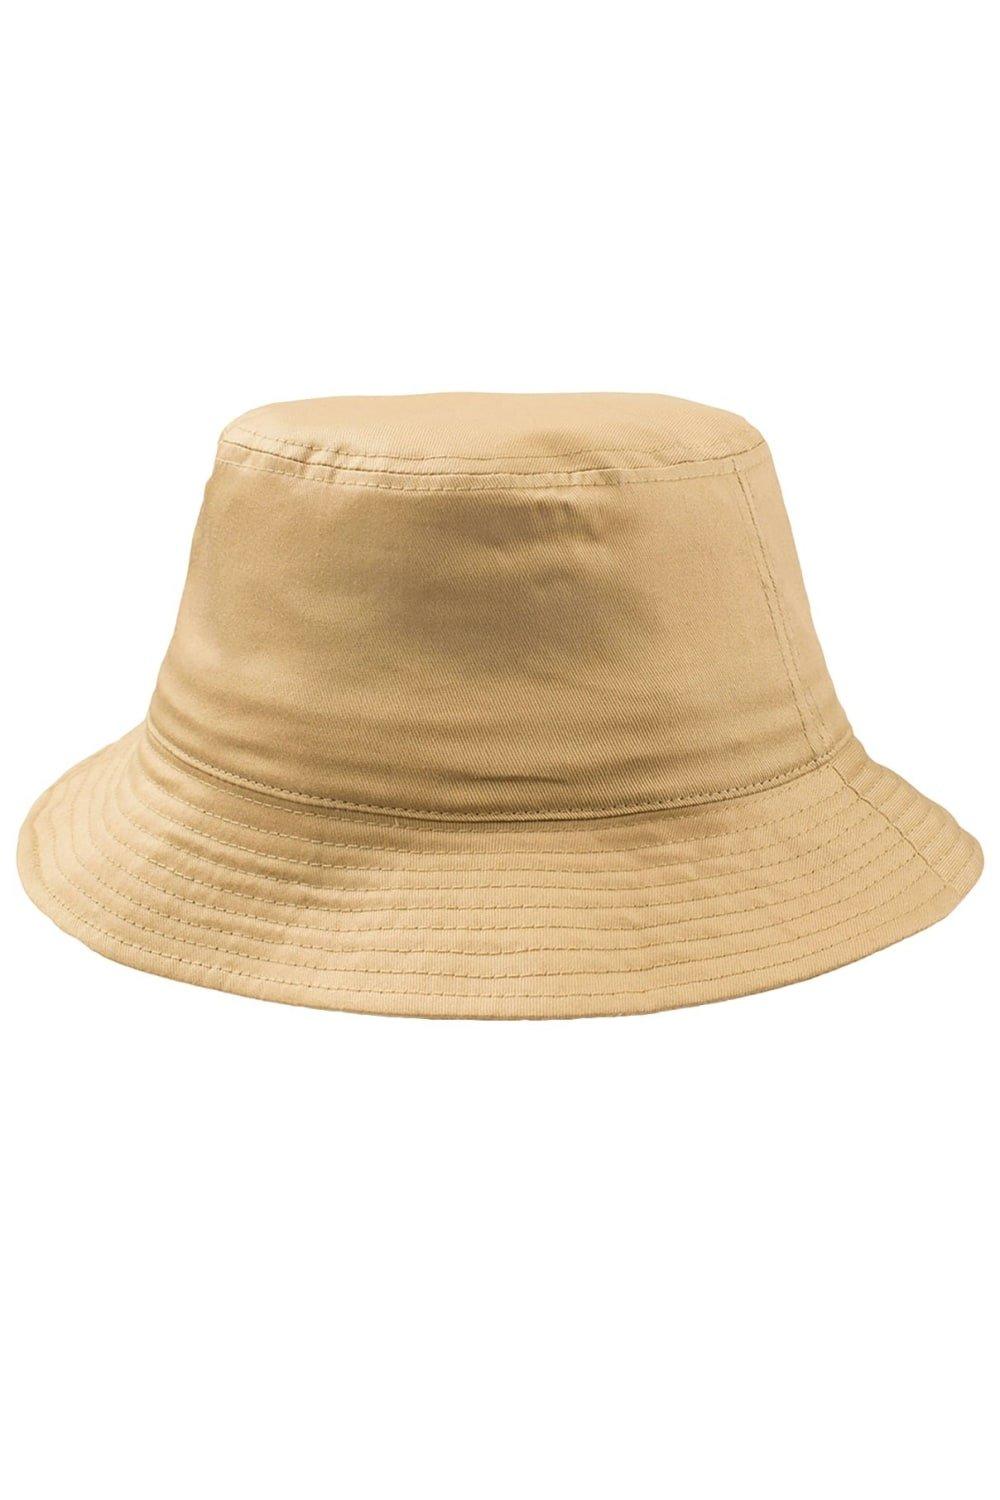 Atlantis Cotton Bucket Hat|khaki